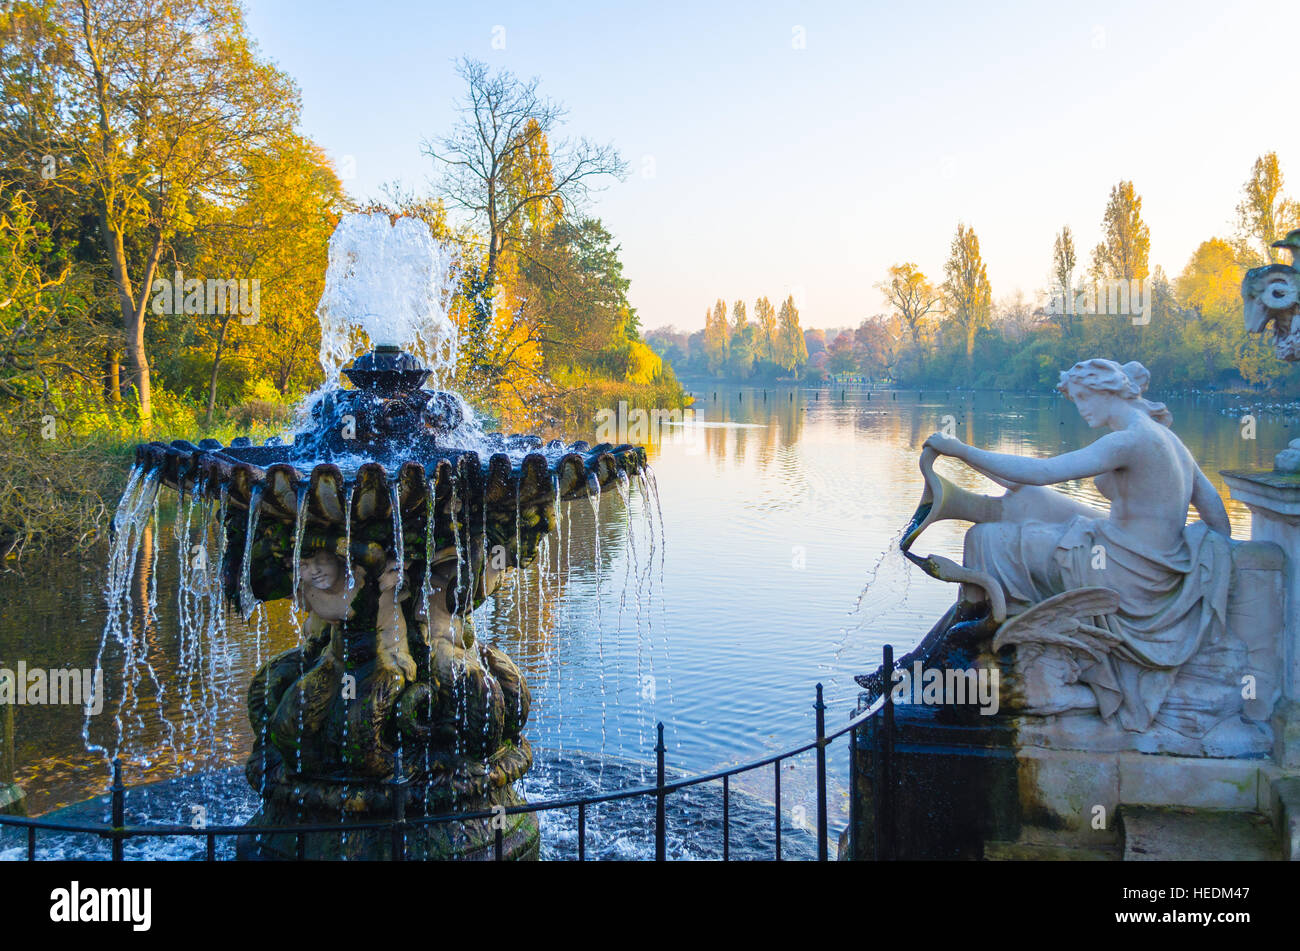 Una scultura fontana e dal lago a serpentina a Hyde Park in autunno, Londra Foto Stock